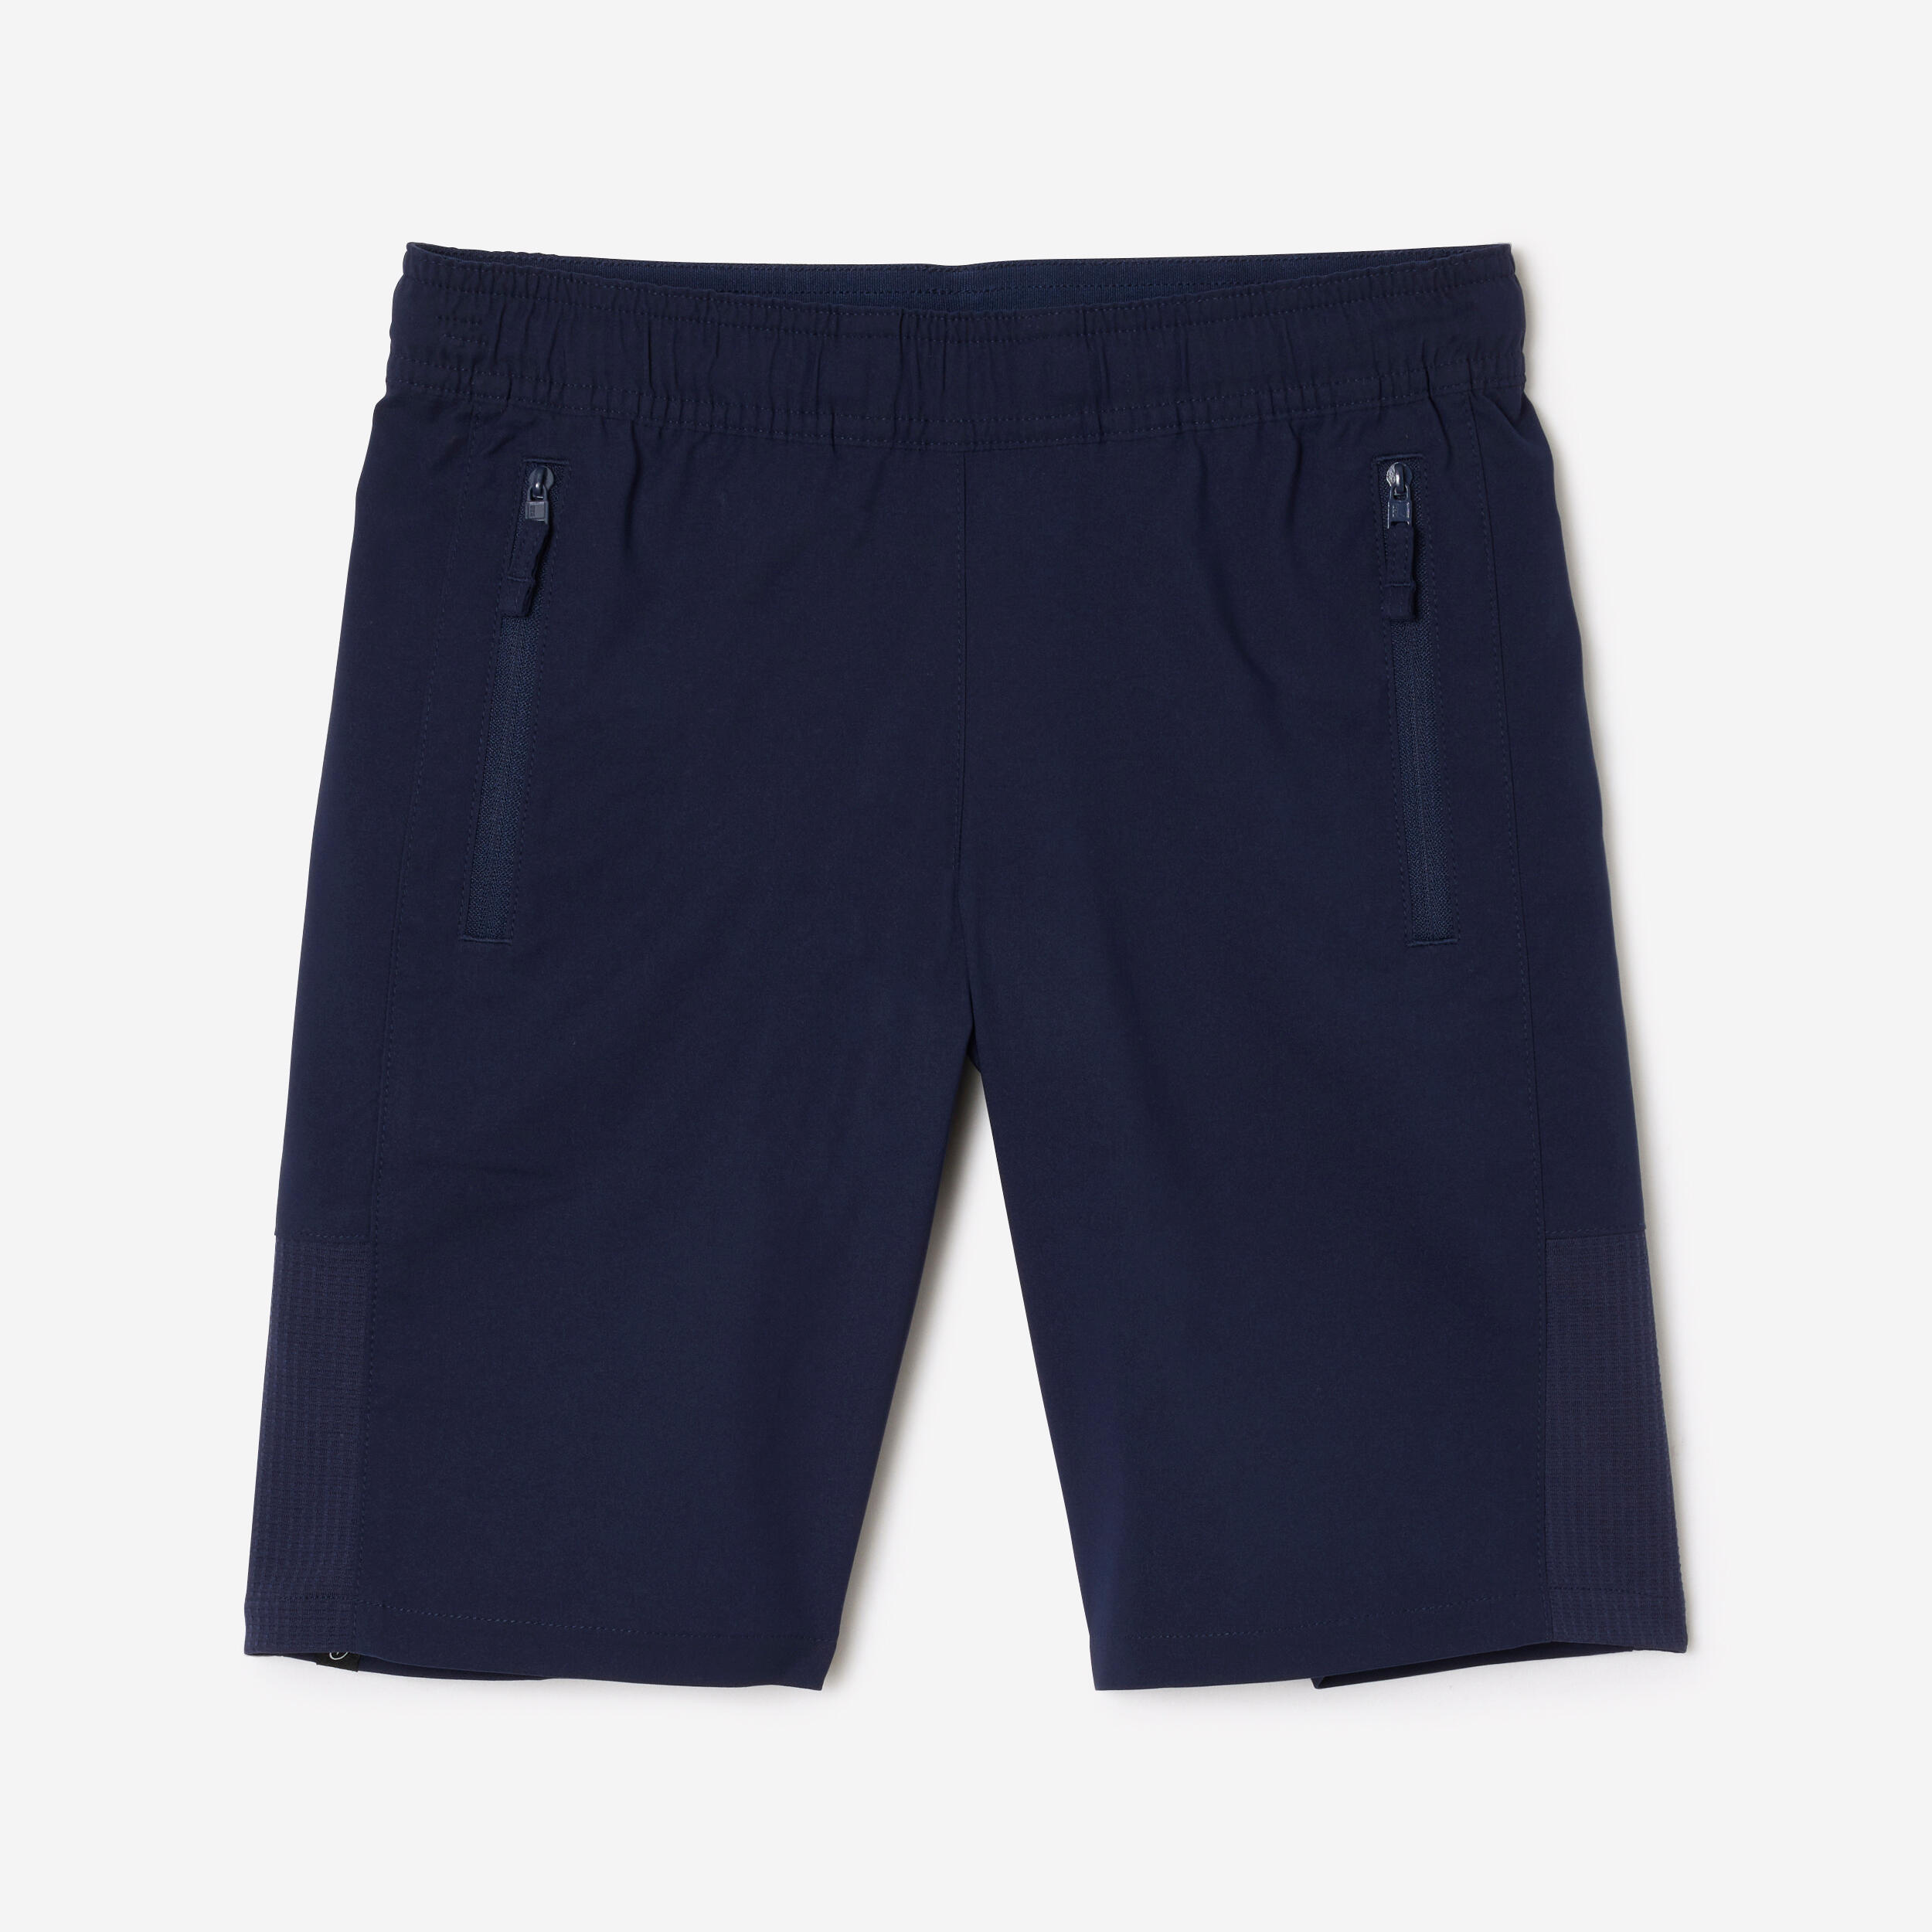 DECATHLON Kids' Breathable Shorts - Navy Blue